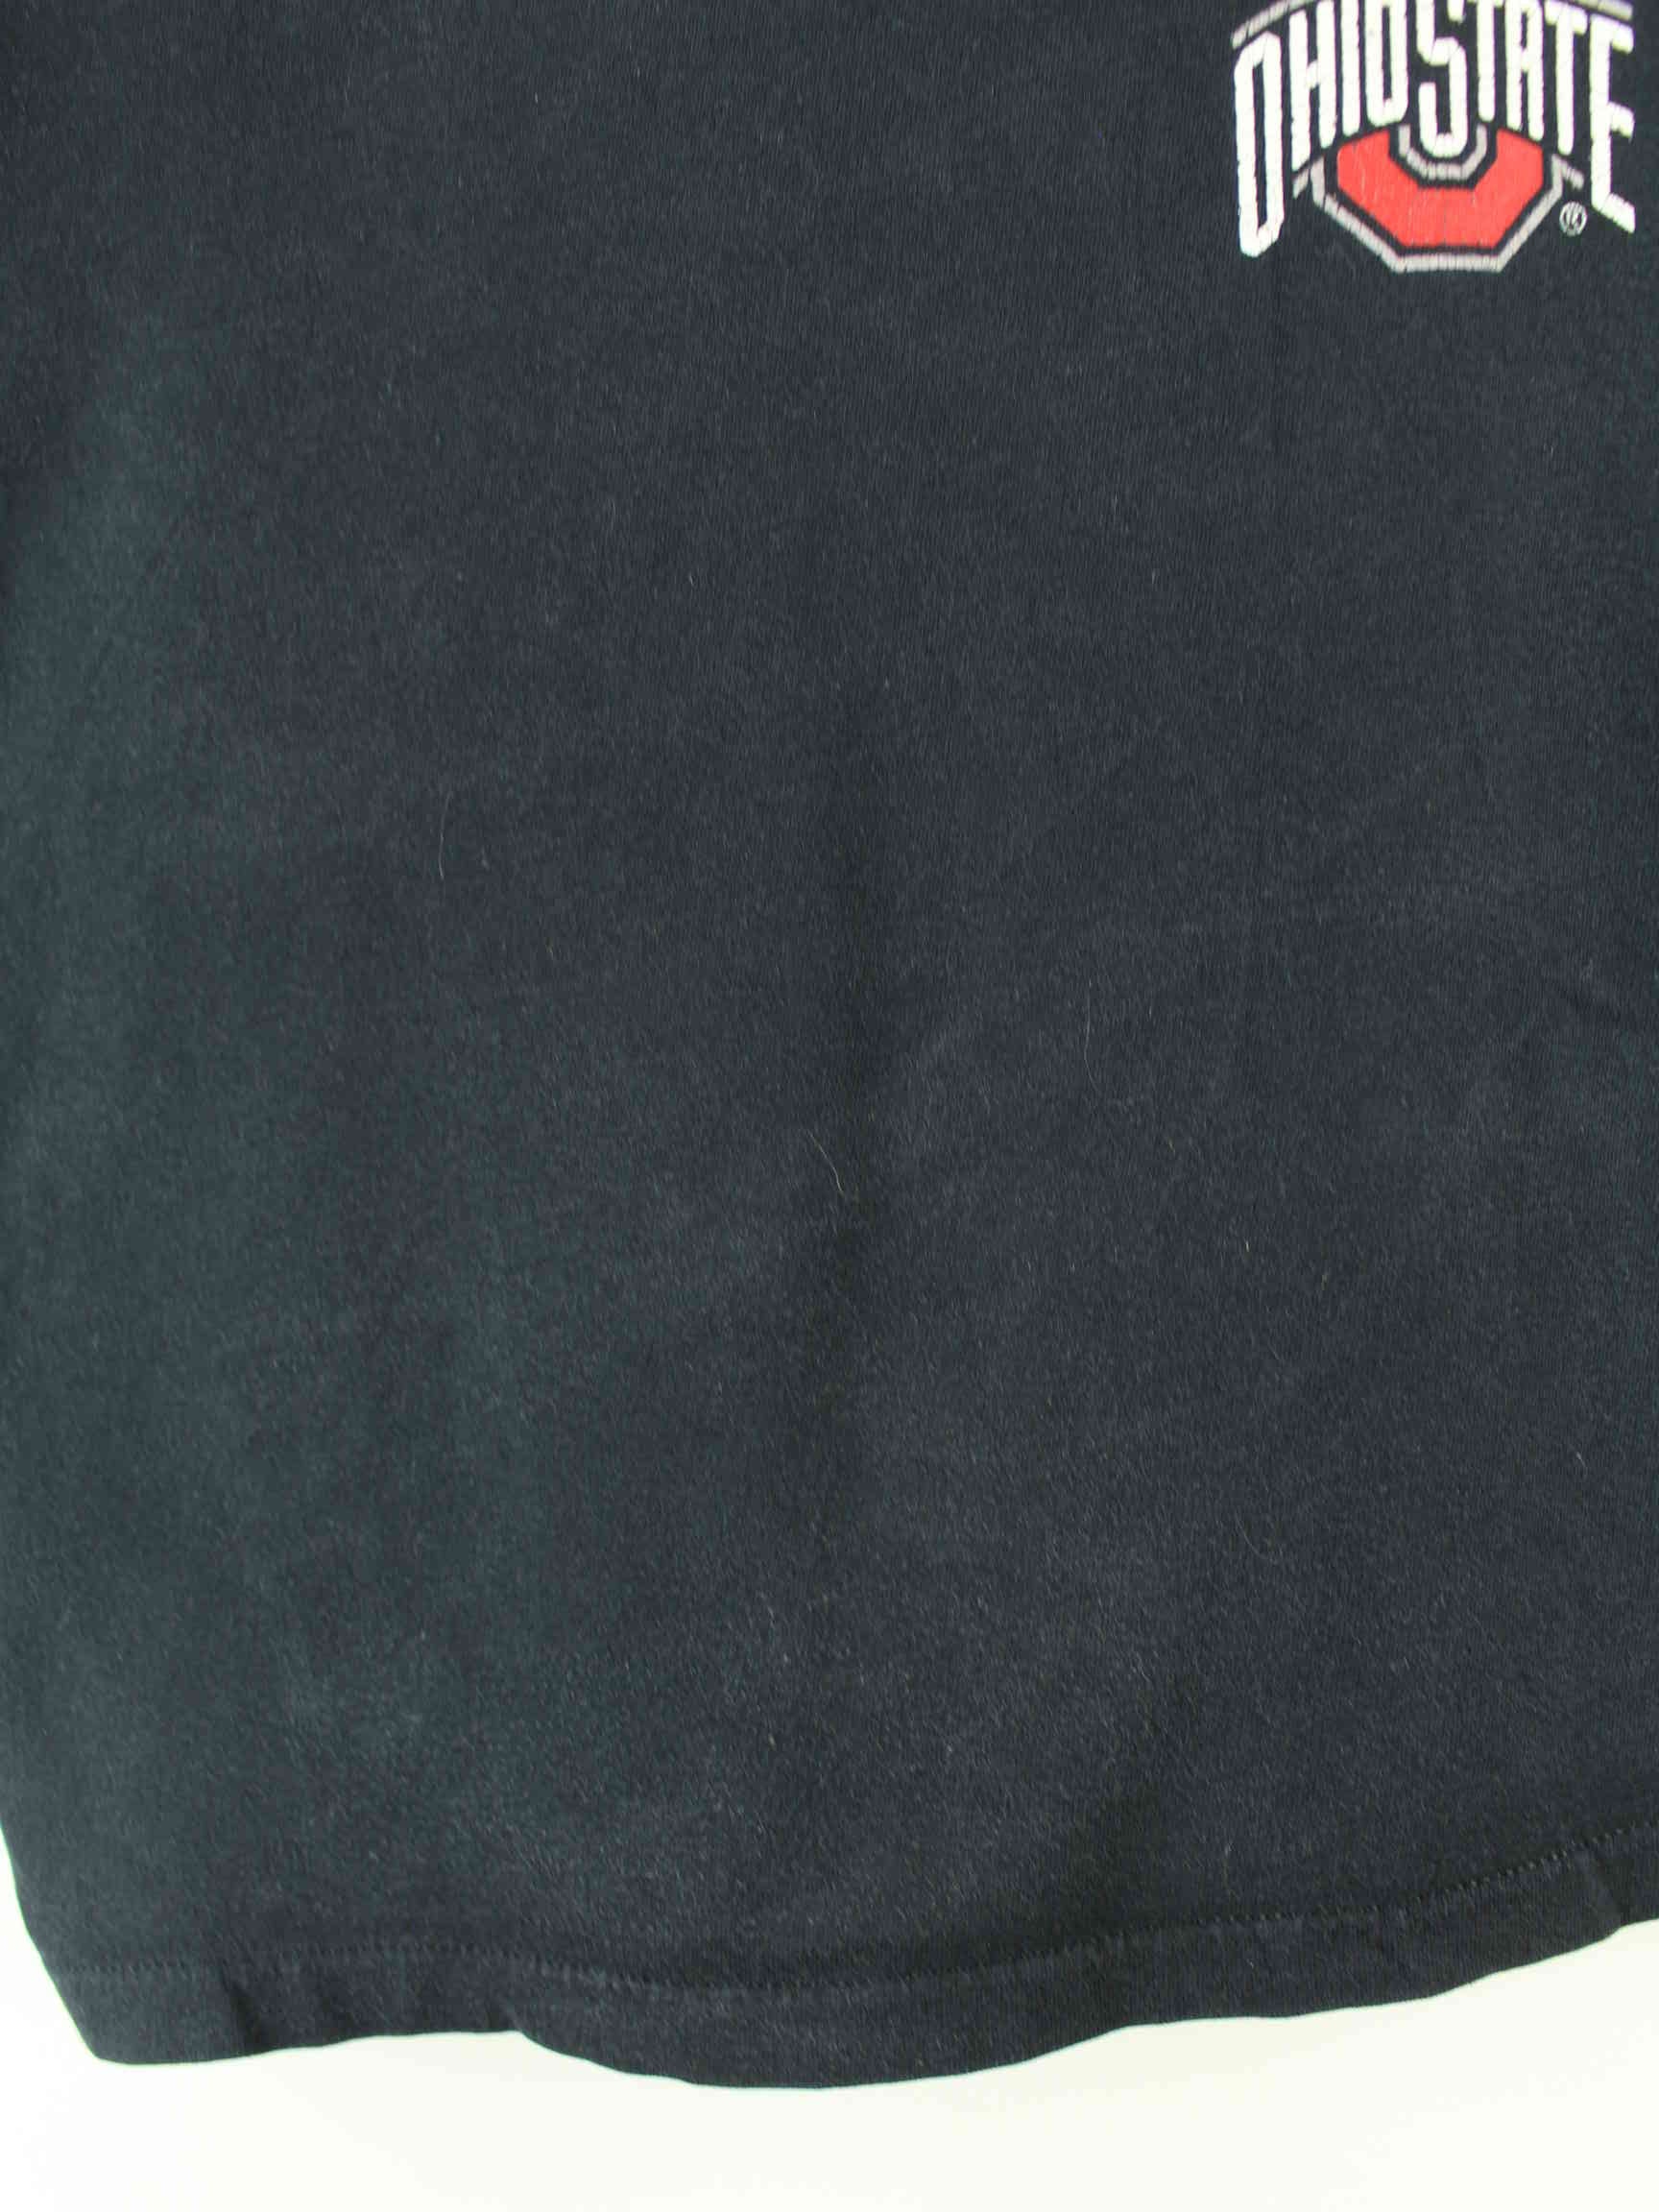 Nike 2015 Ohio State Champions Print T-Shirt Schwarz XL (detail image 2)